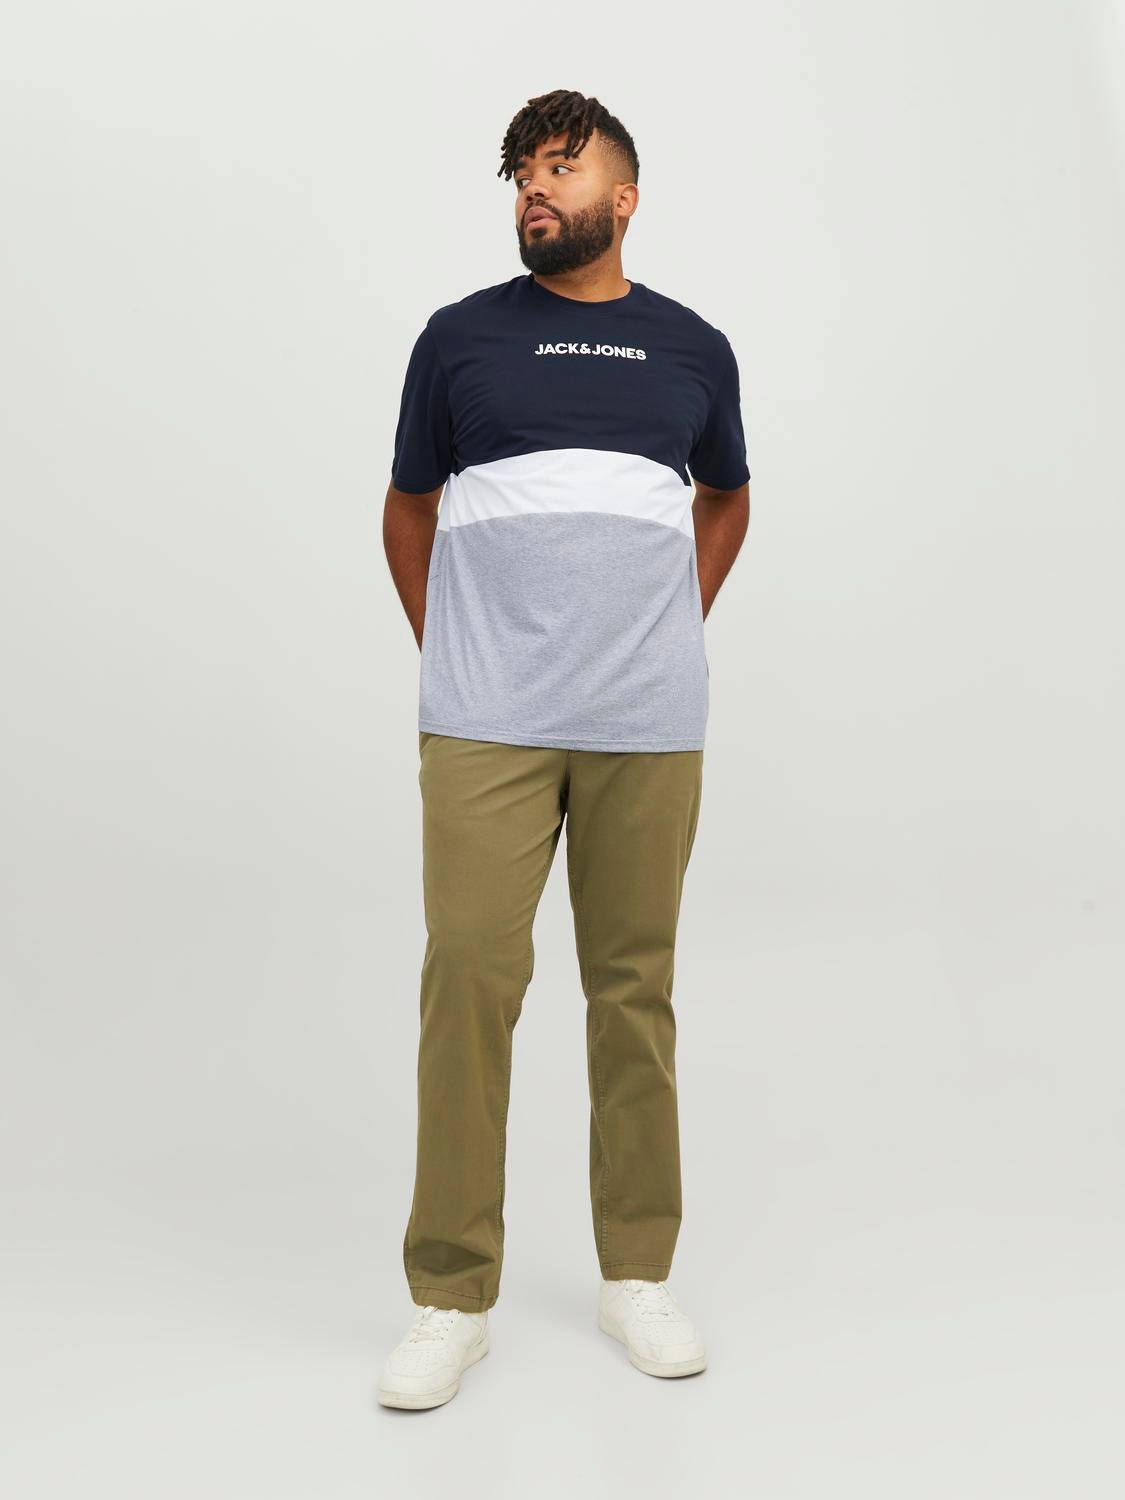 Jack & Jones Plus Size Camiseta Bloques de color -Navy Blazer - 12243653